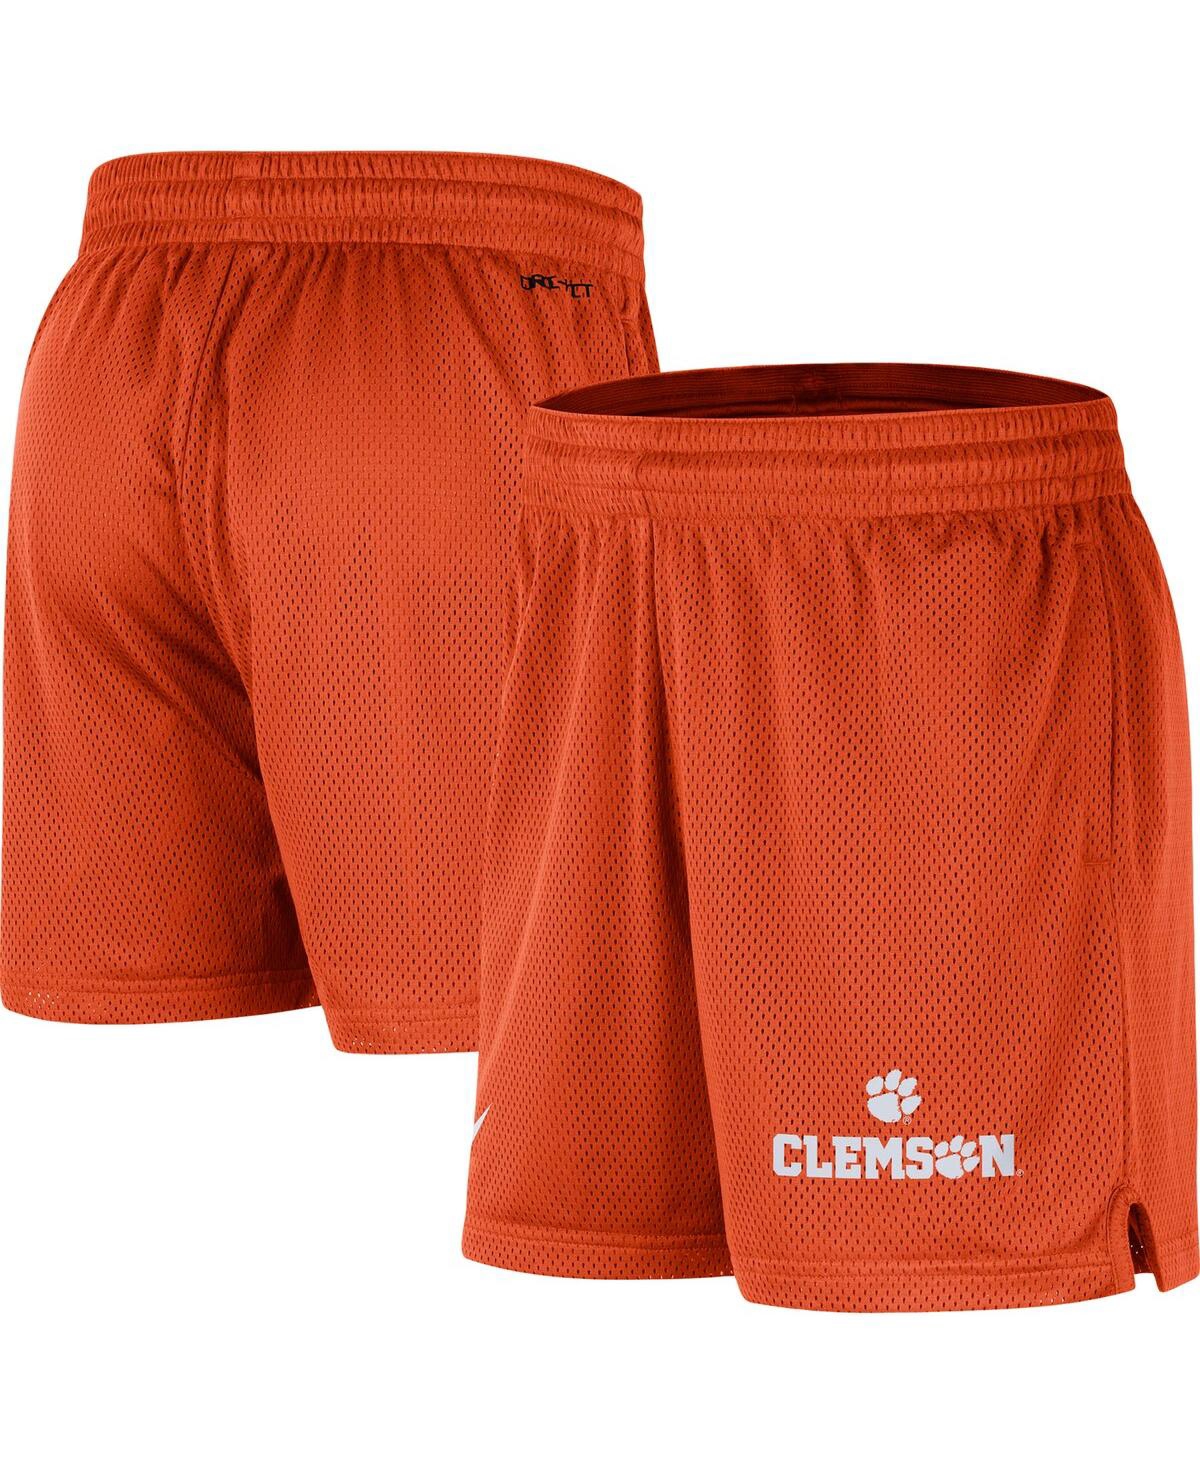 Shop Nike Men's  Orange Clemson Tigers Mesh Performance Shorts